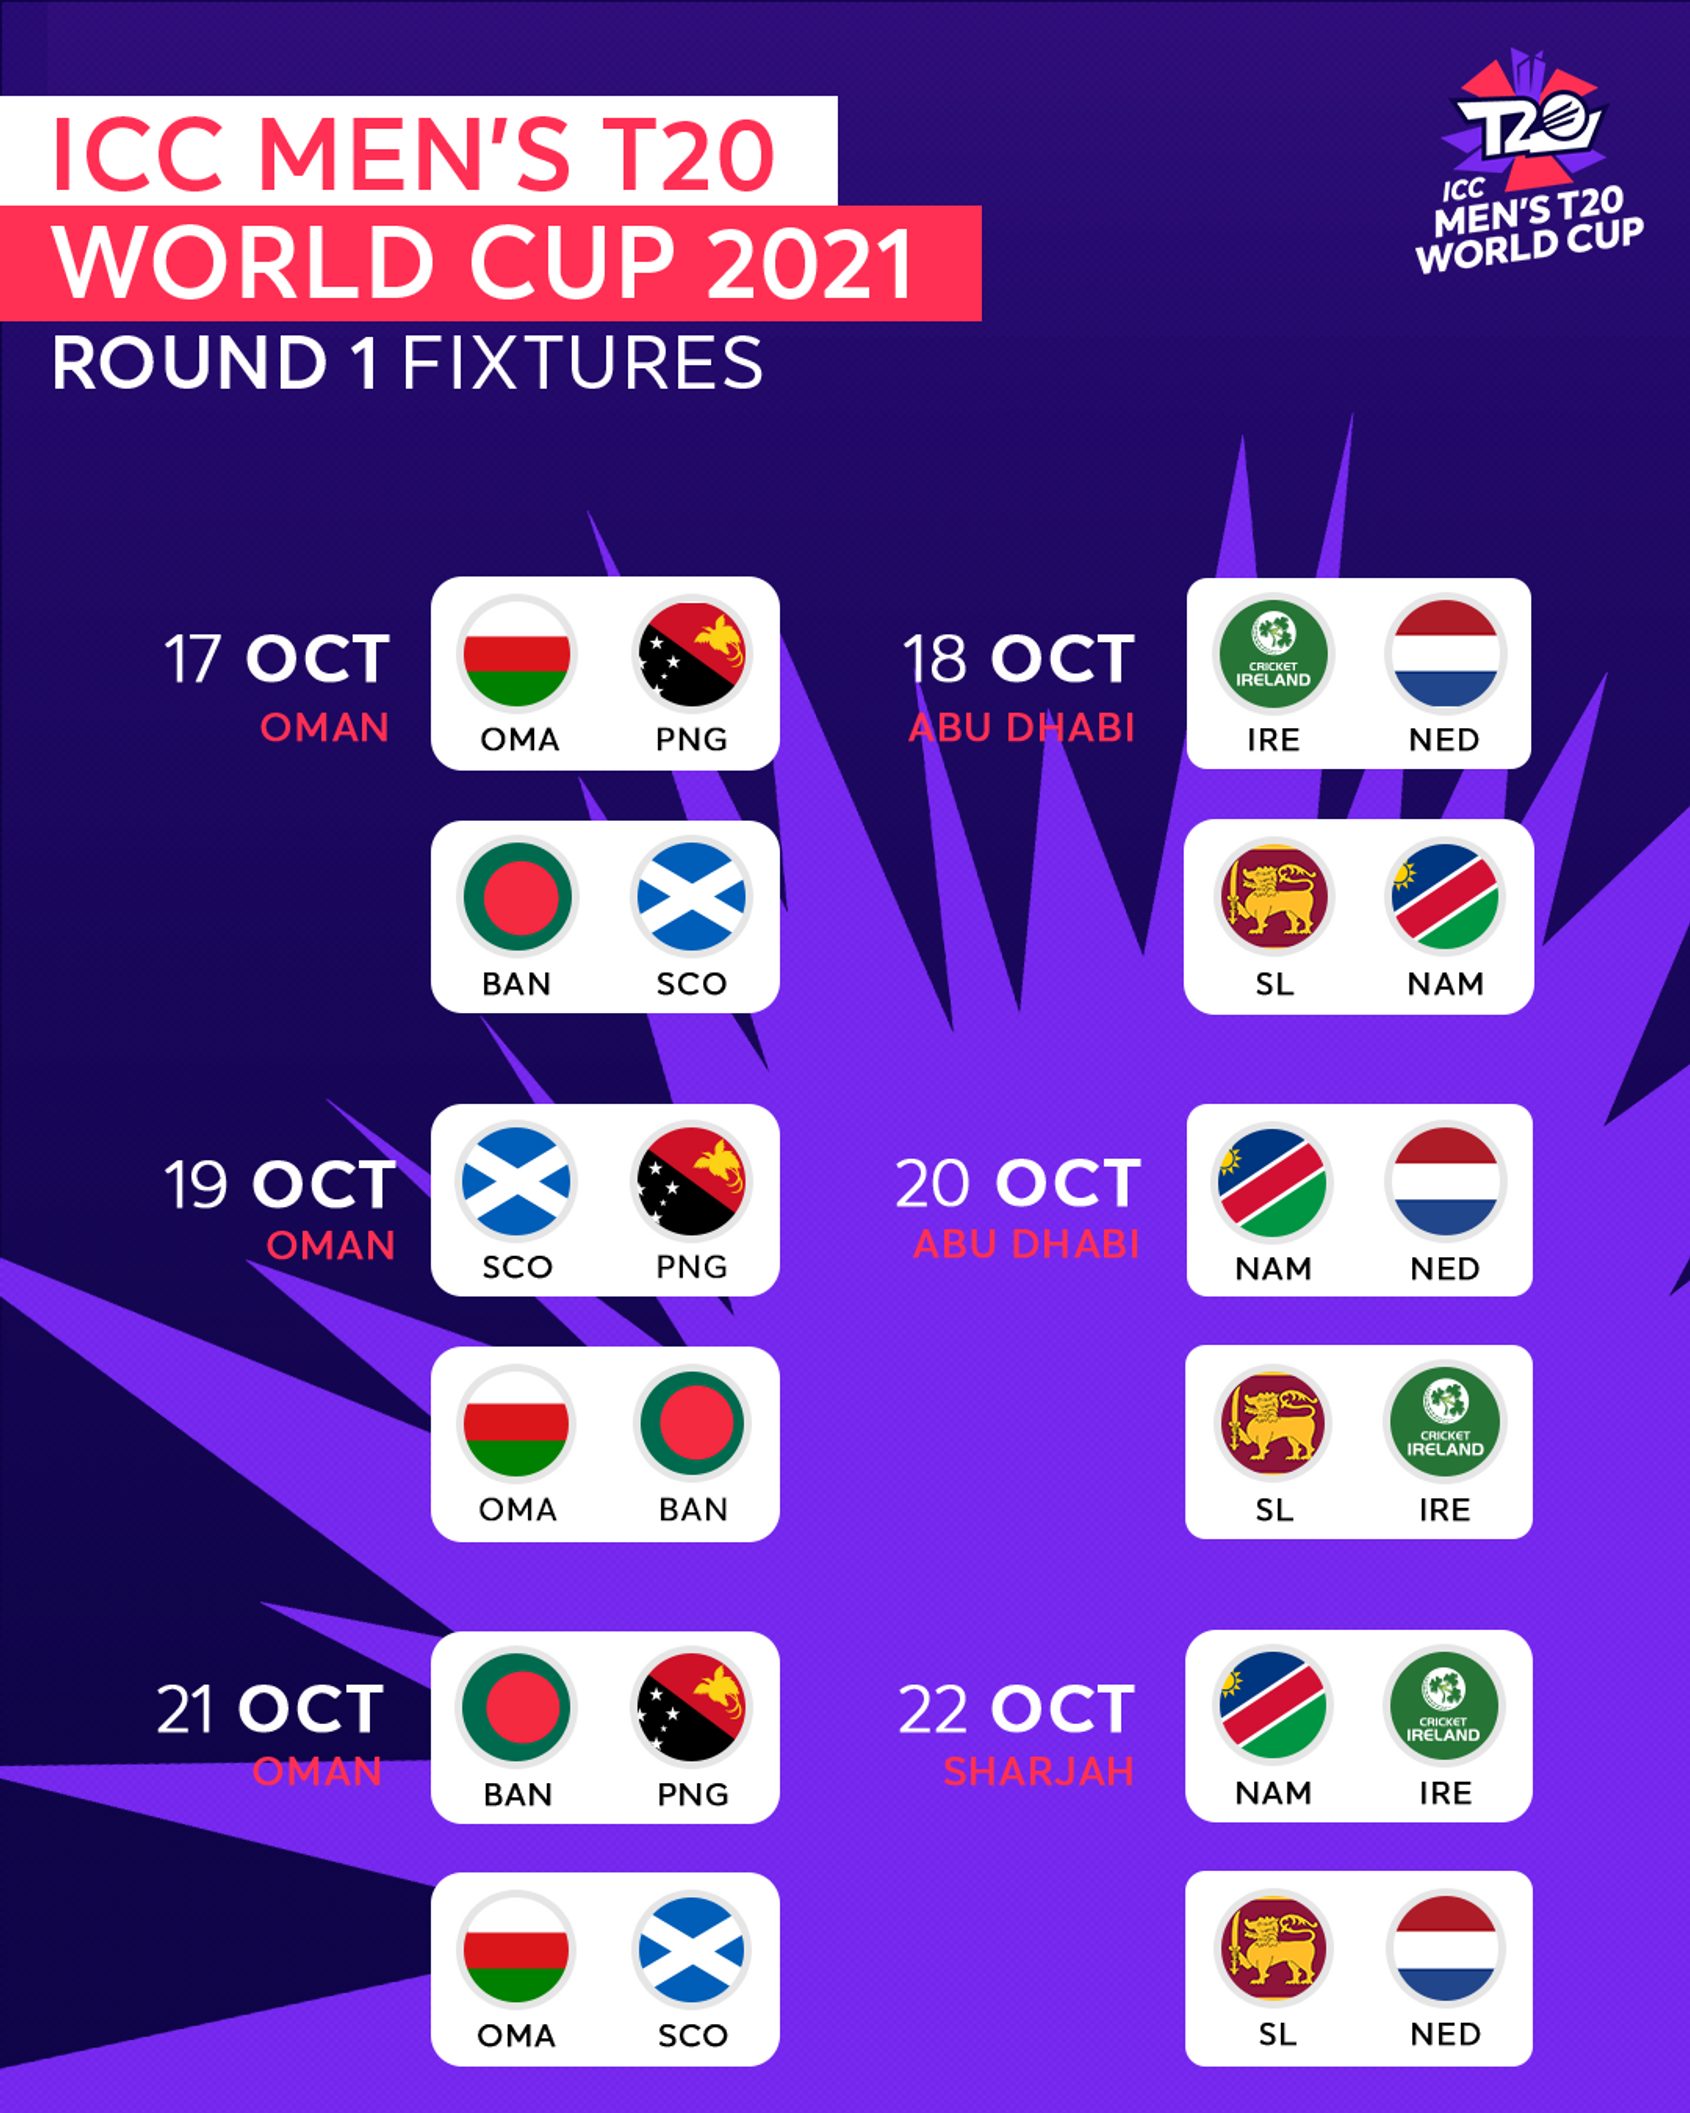 ICC Men’s T20 World Cup 2021 fixtures revealed